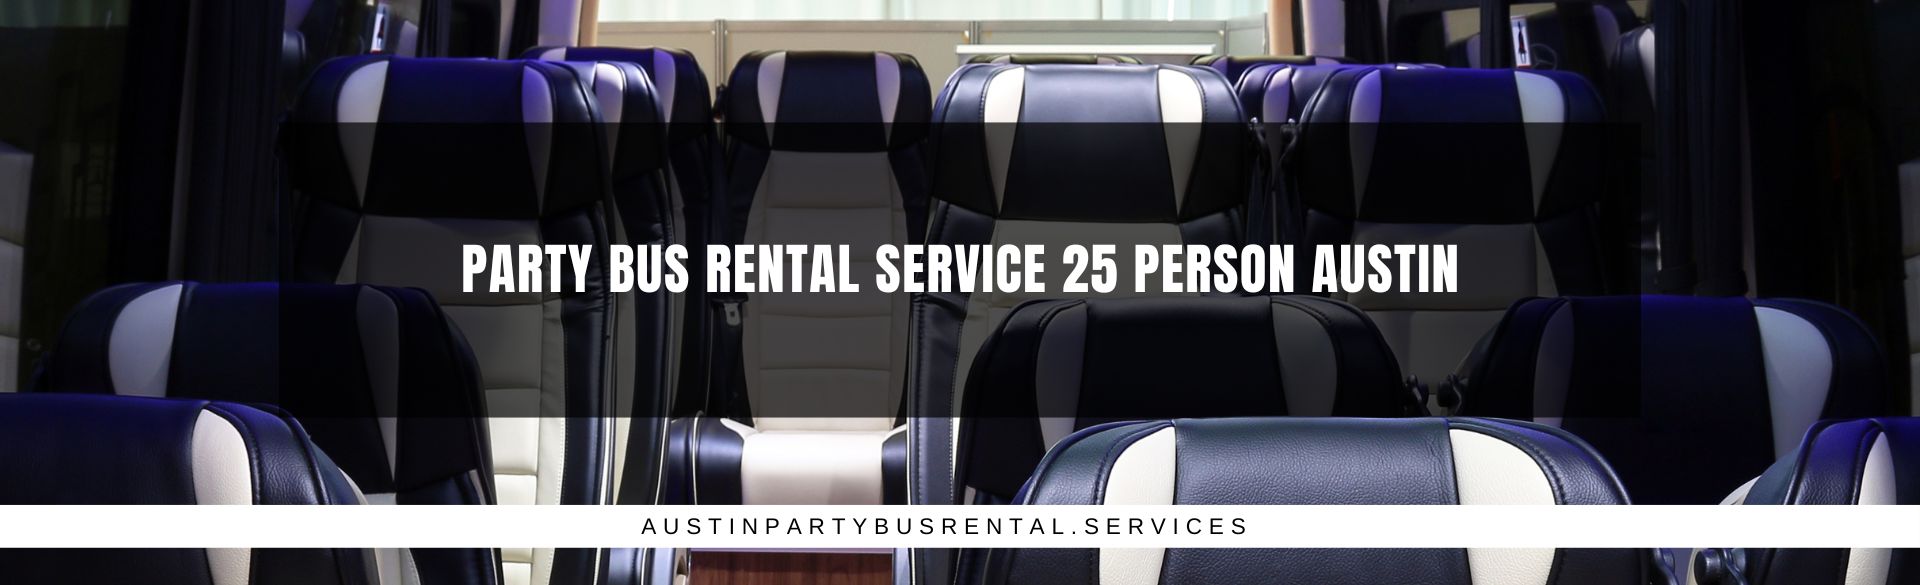 Party Bus Rental Service 25 Person Austin